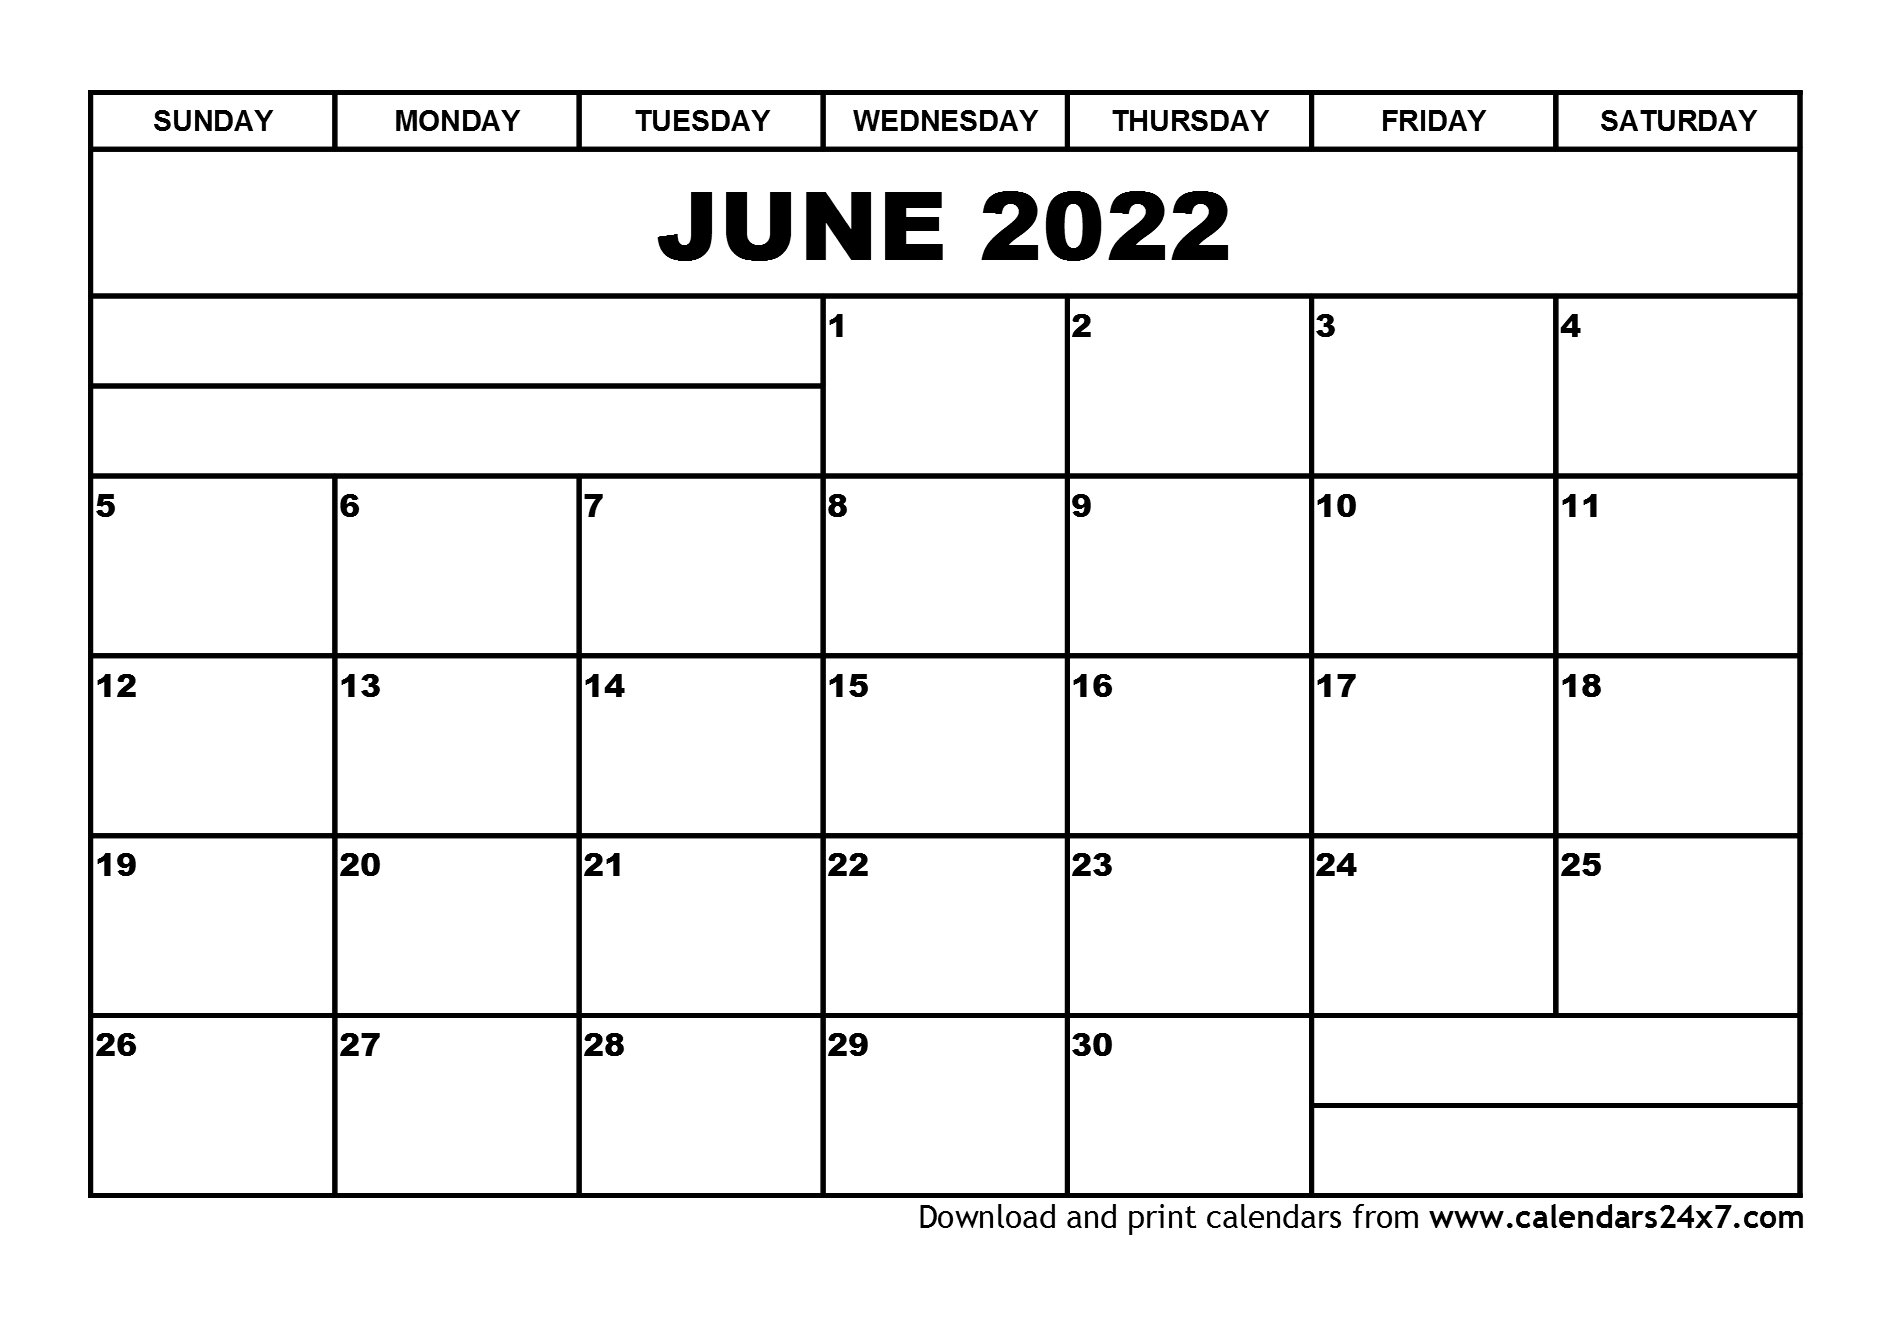 Catch Calendar Dates For June 2022